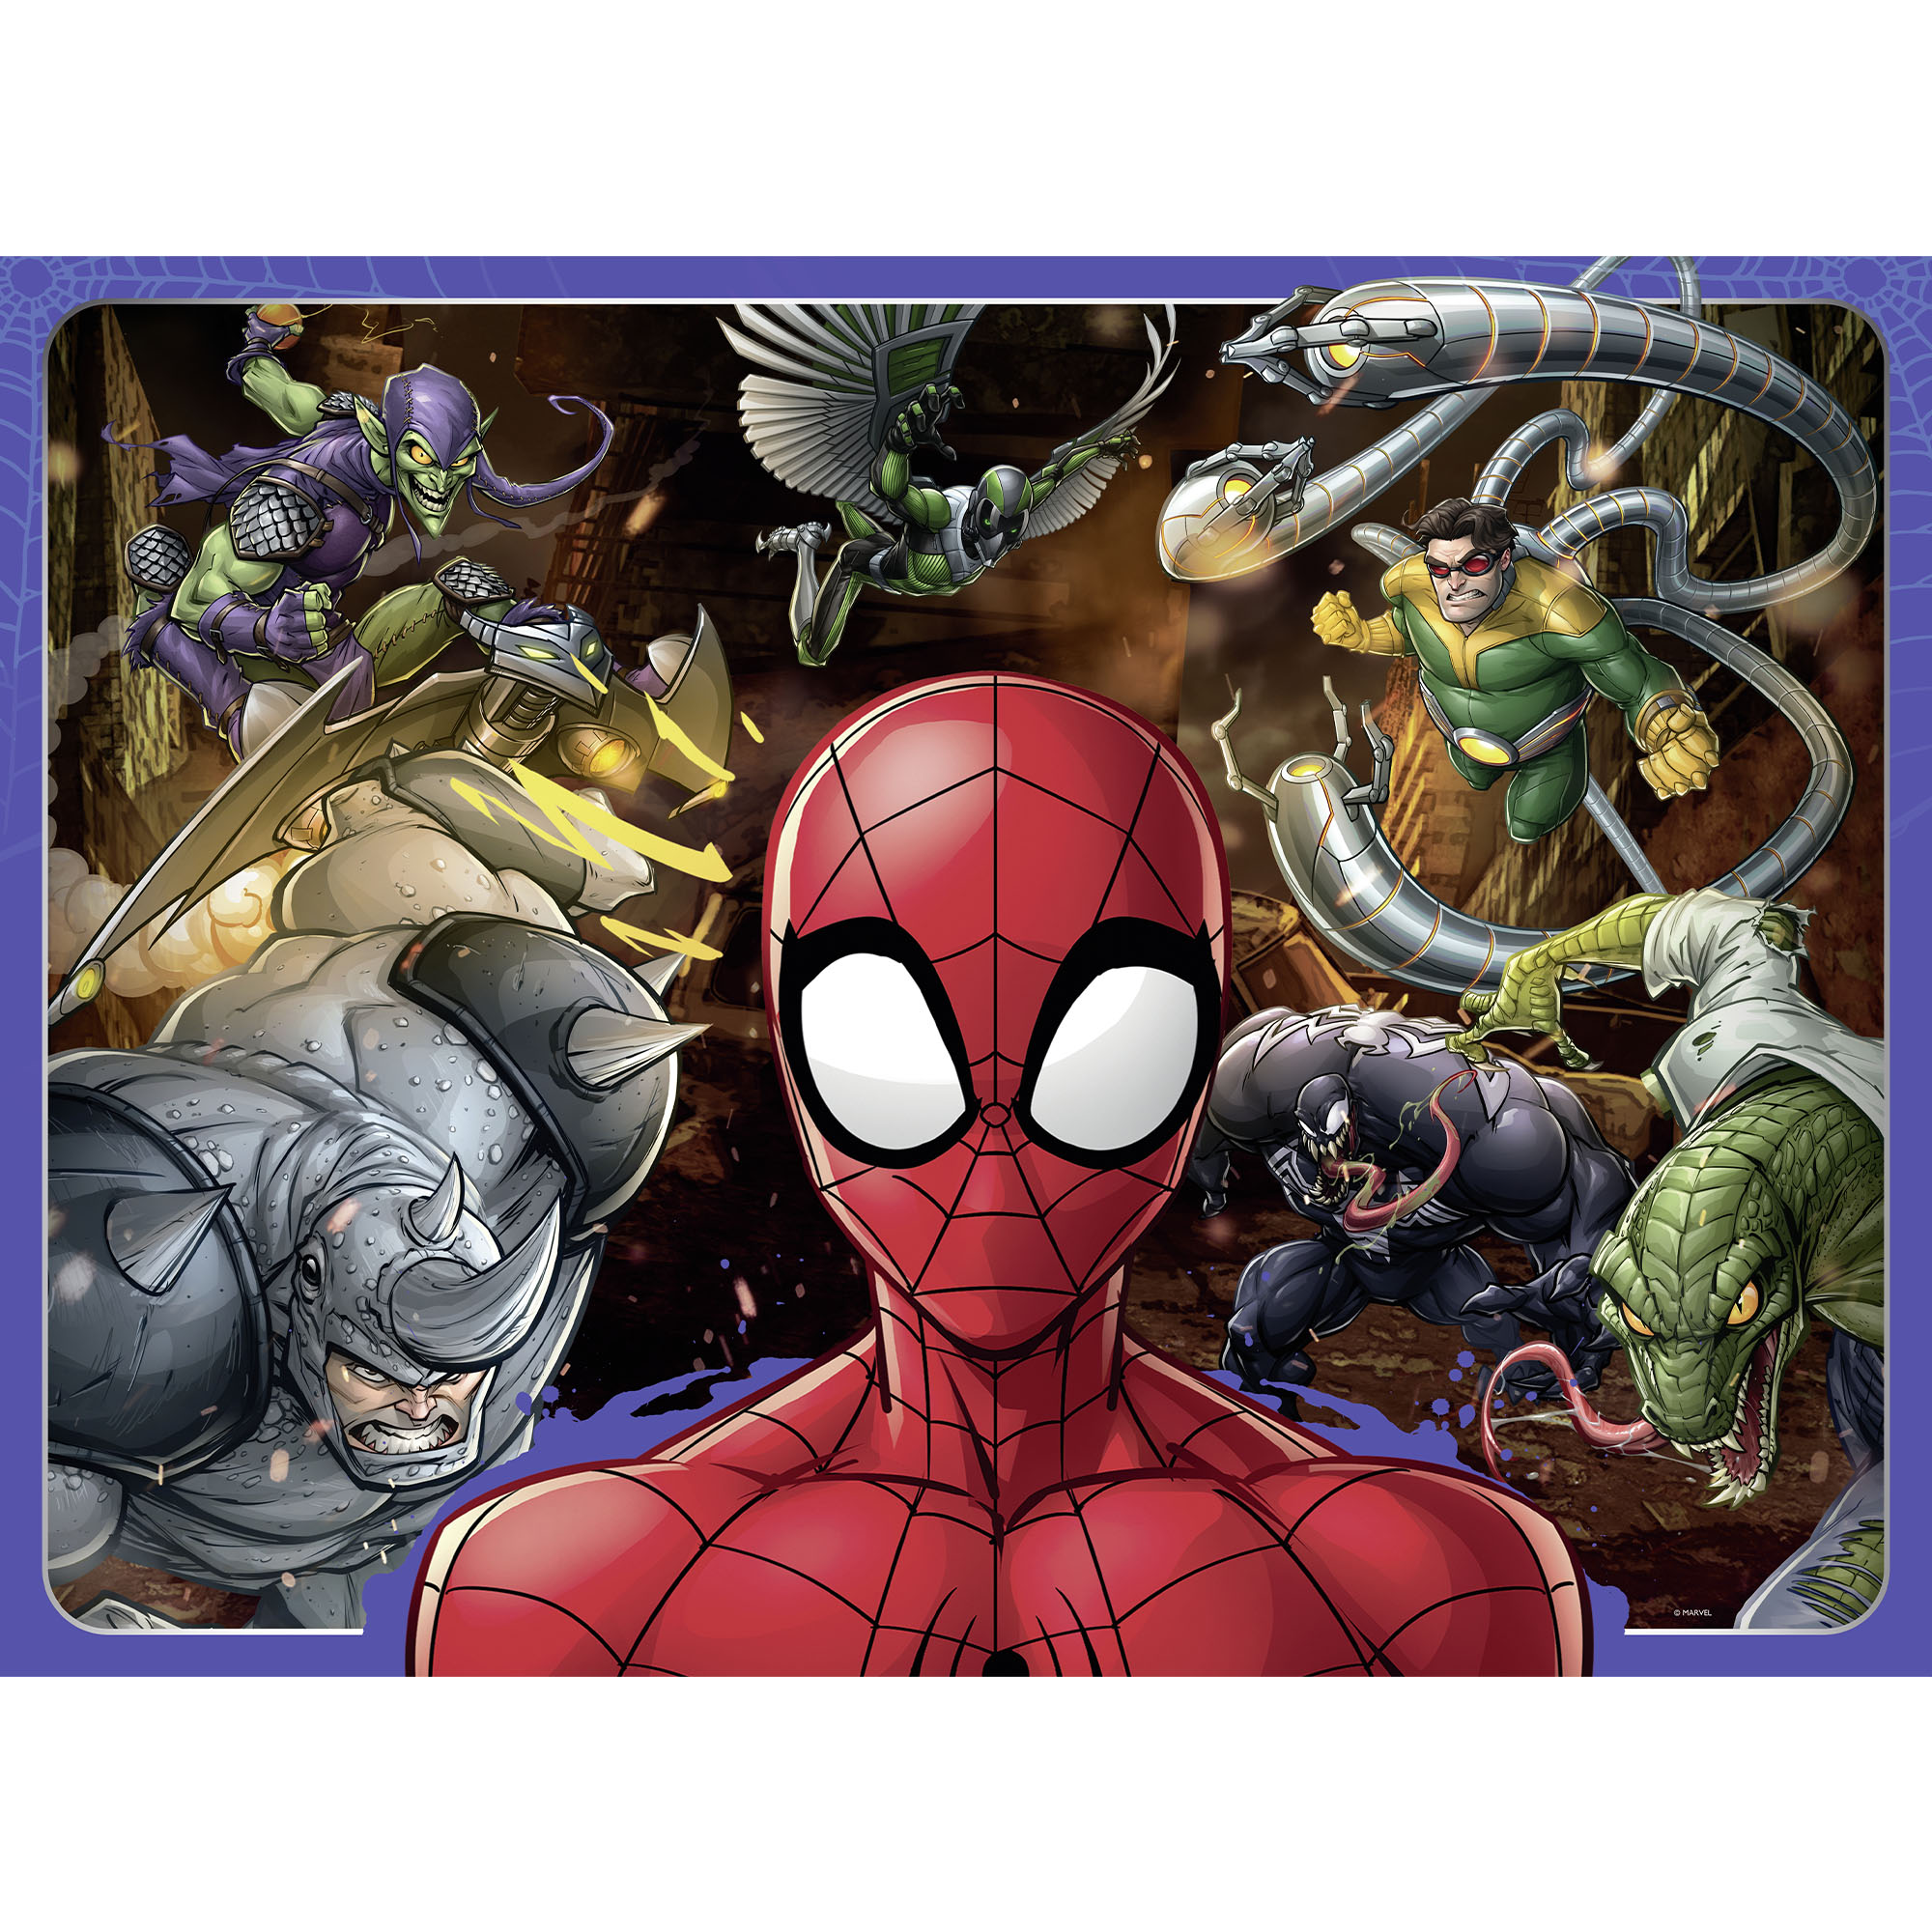 Ravensburger Puzzle 100 pezzi 10728 - Spiderman, , large